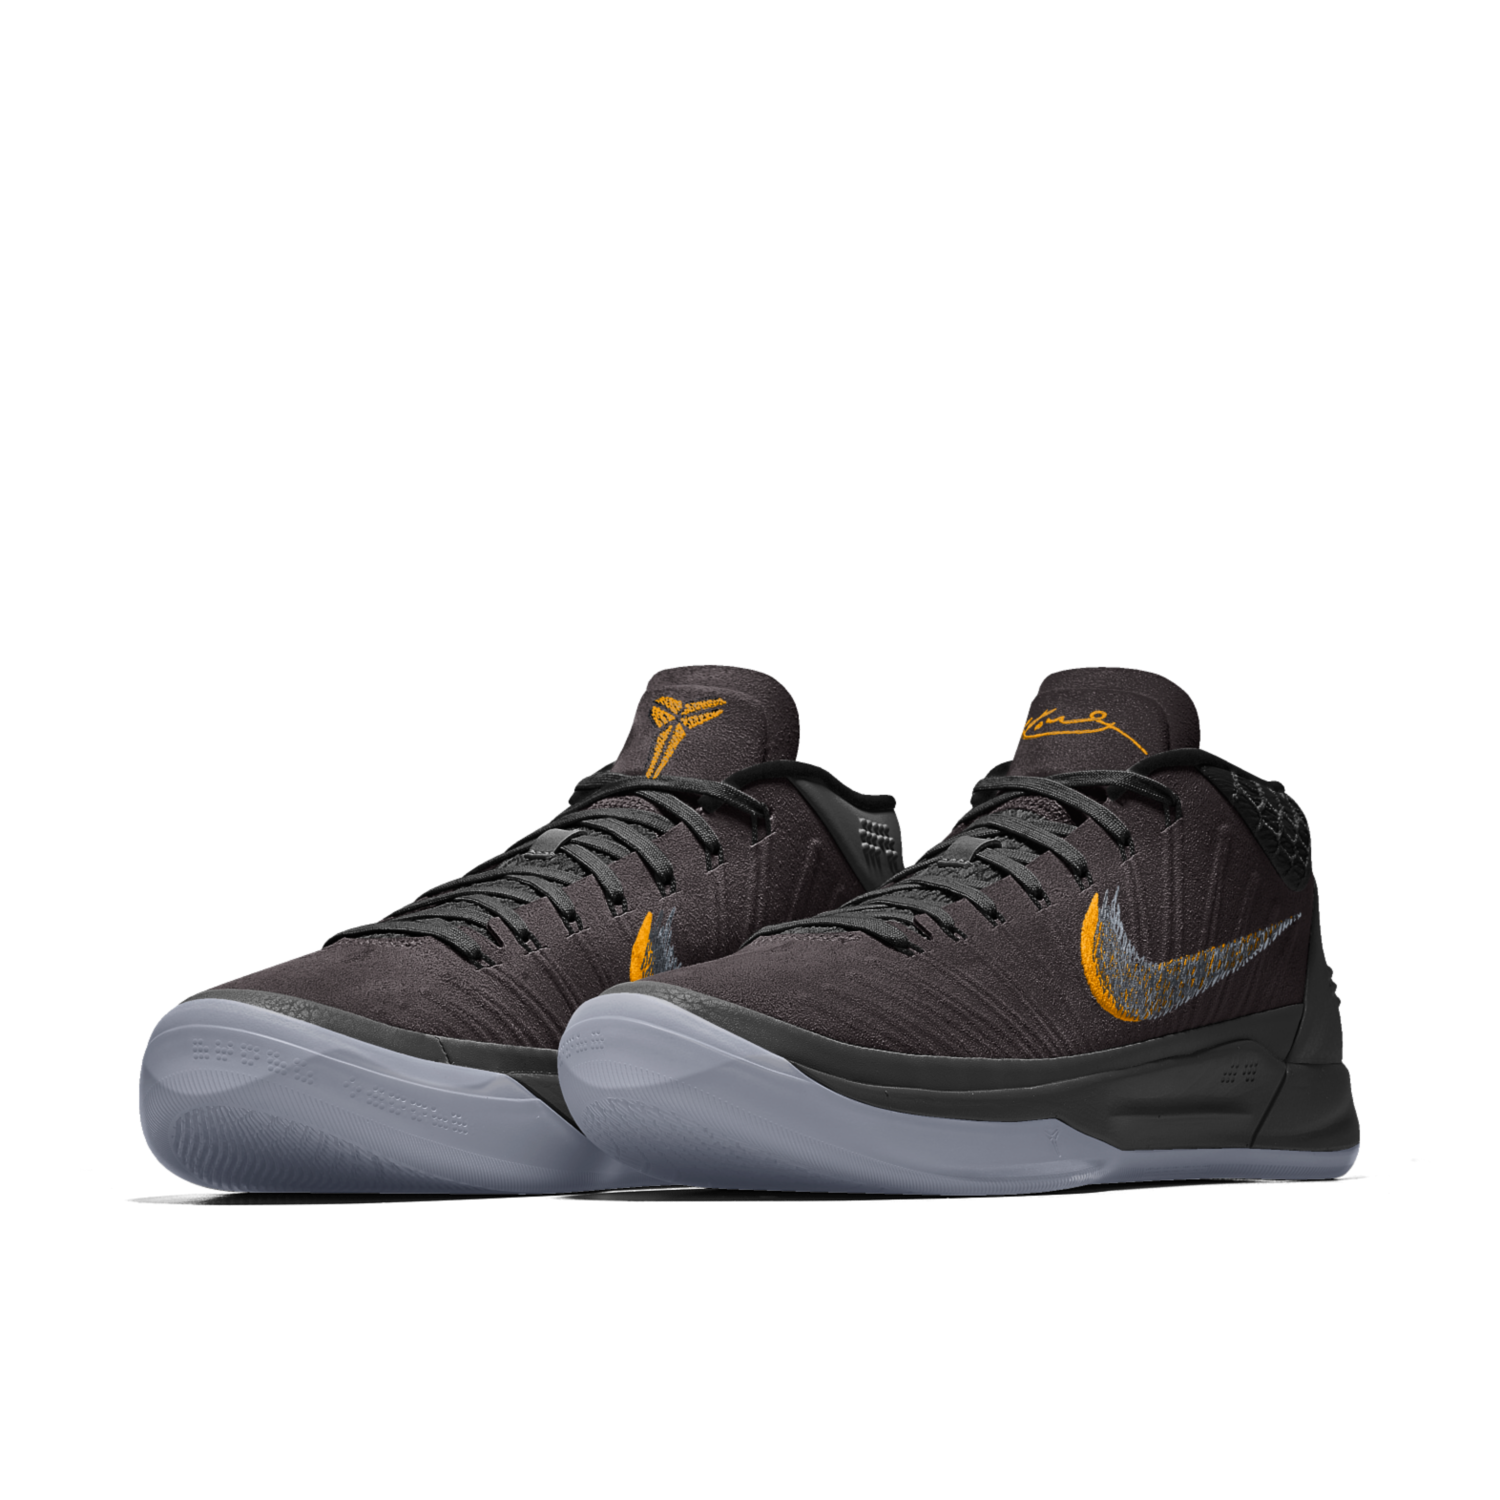 Customize the Latest Nike Kobe AD 